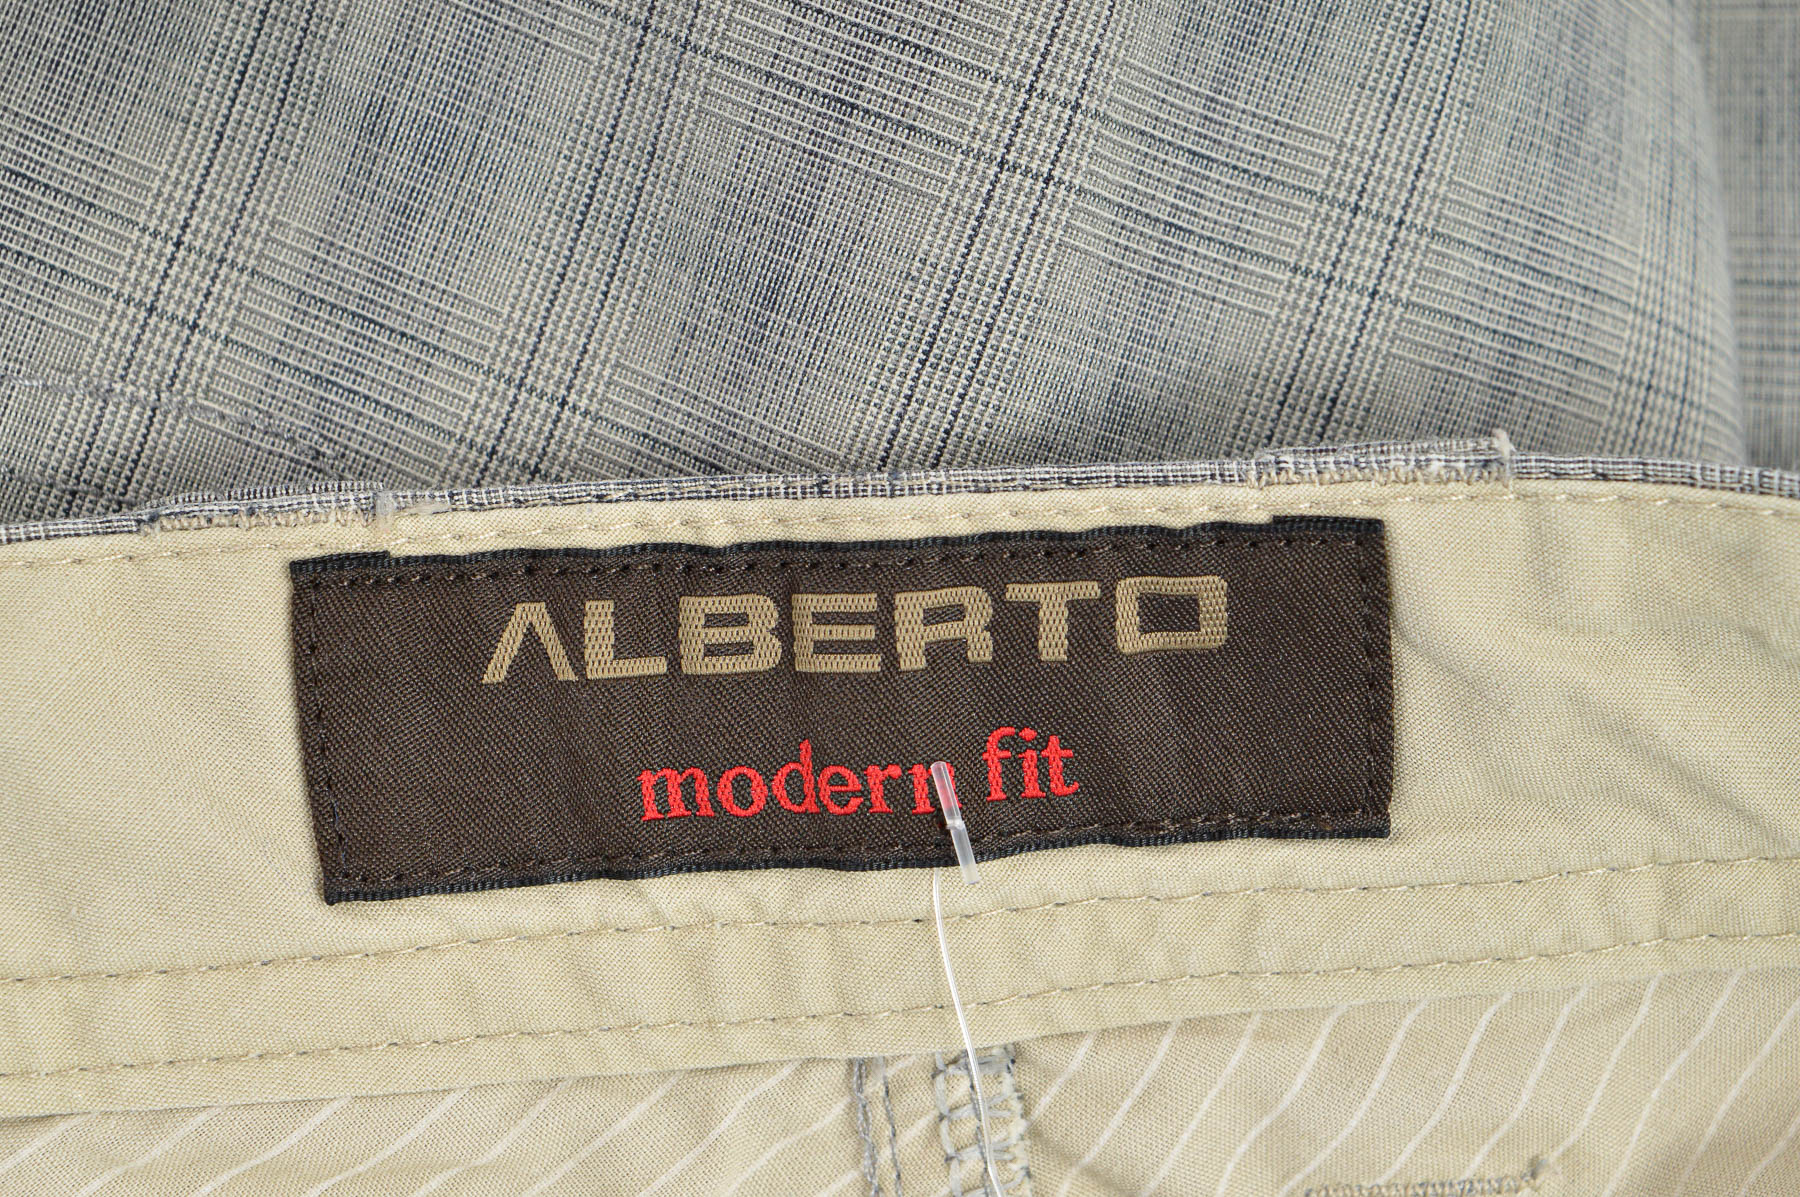 Men's trousers - Alberto - 2